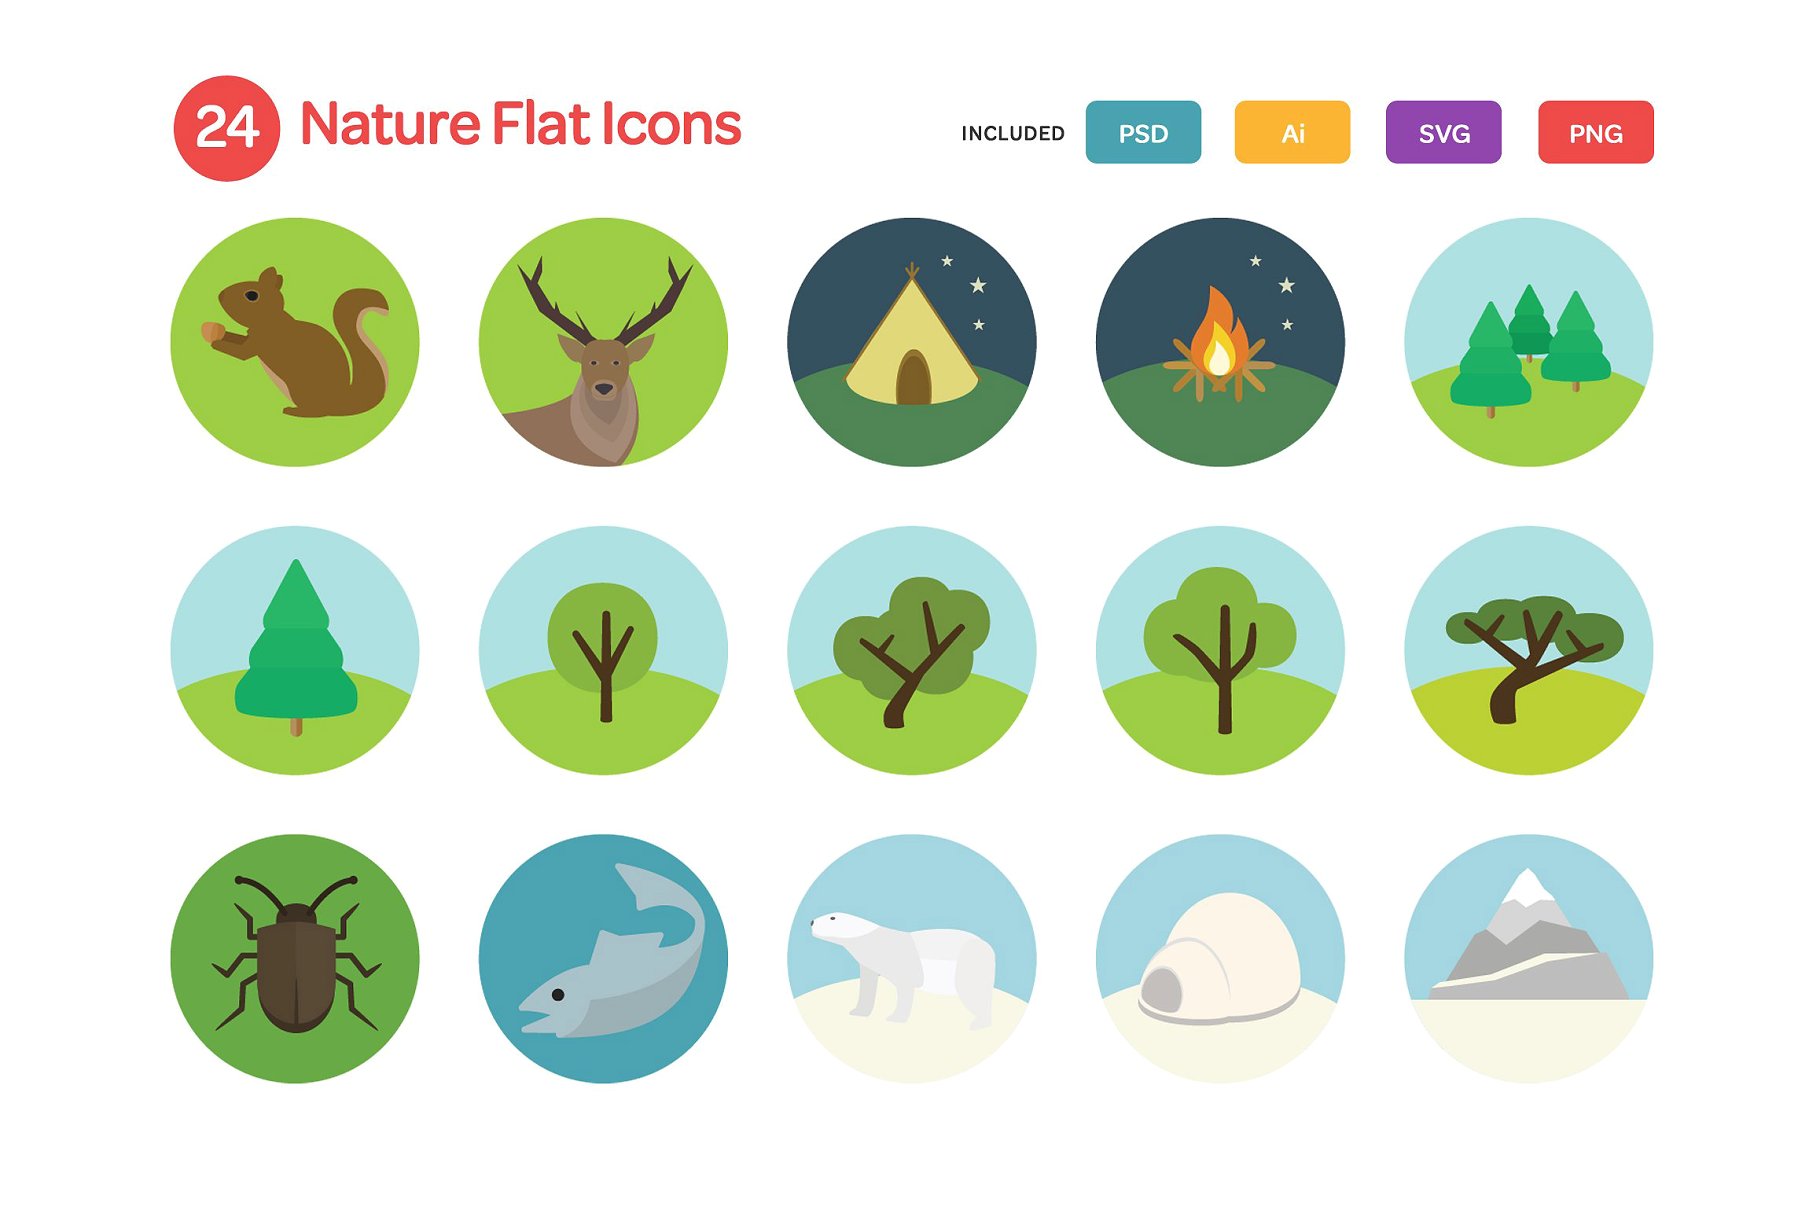 大自然元素图标素材 nature flat icons set